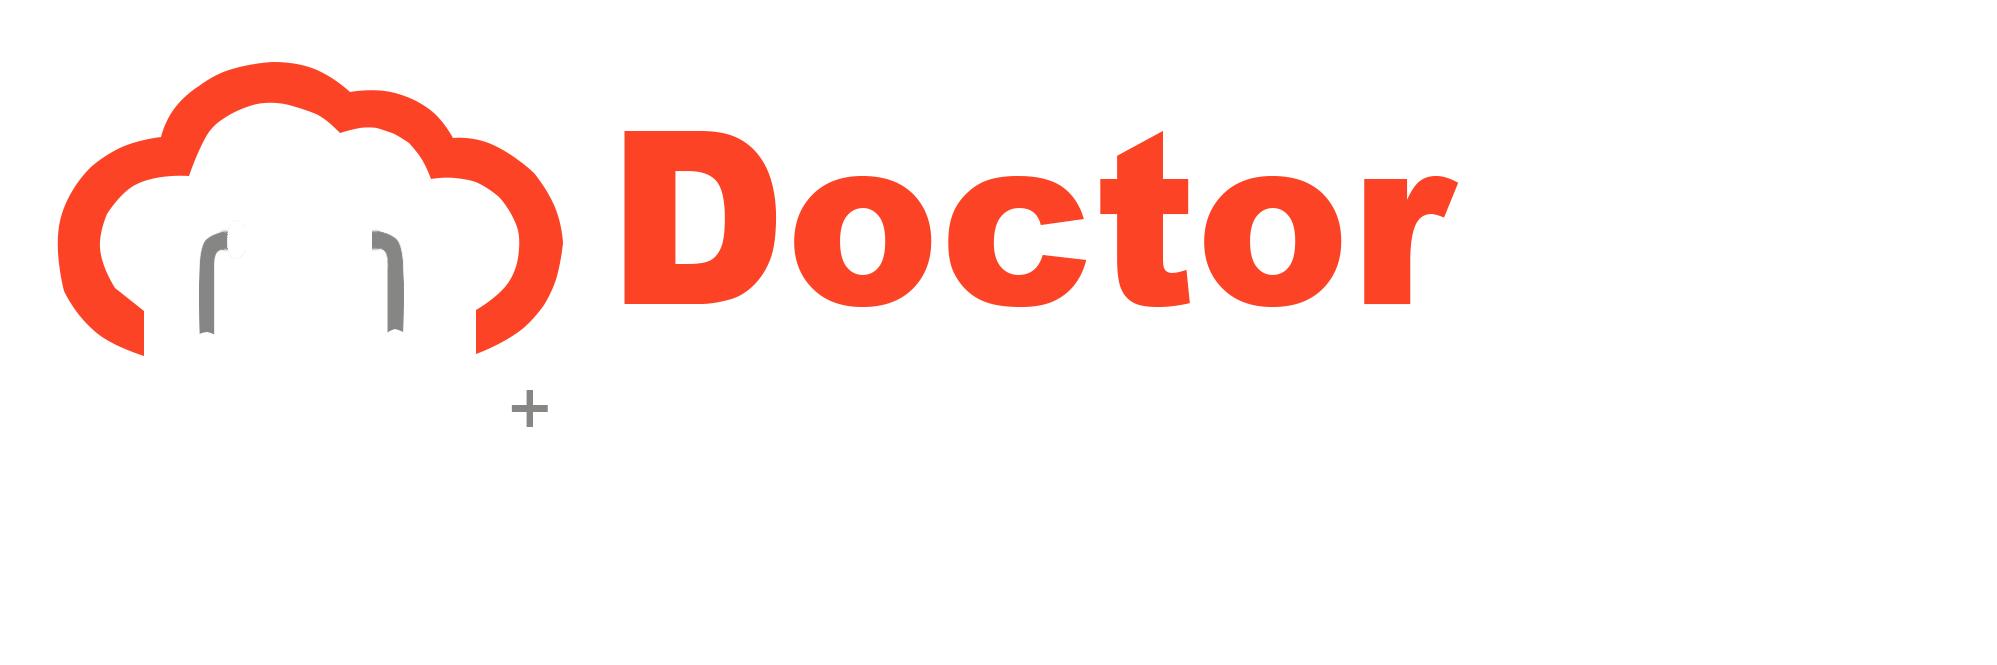 DoctorHoster (Pvt.) Ltd.